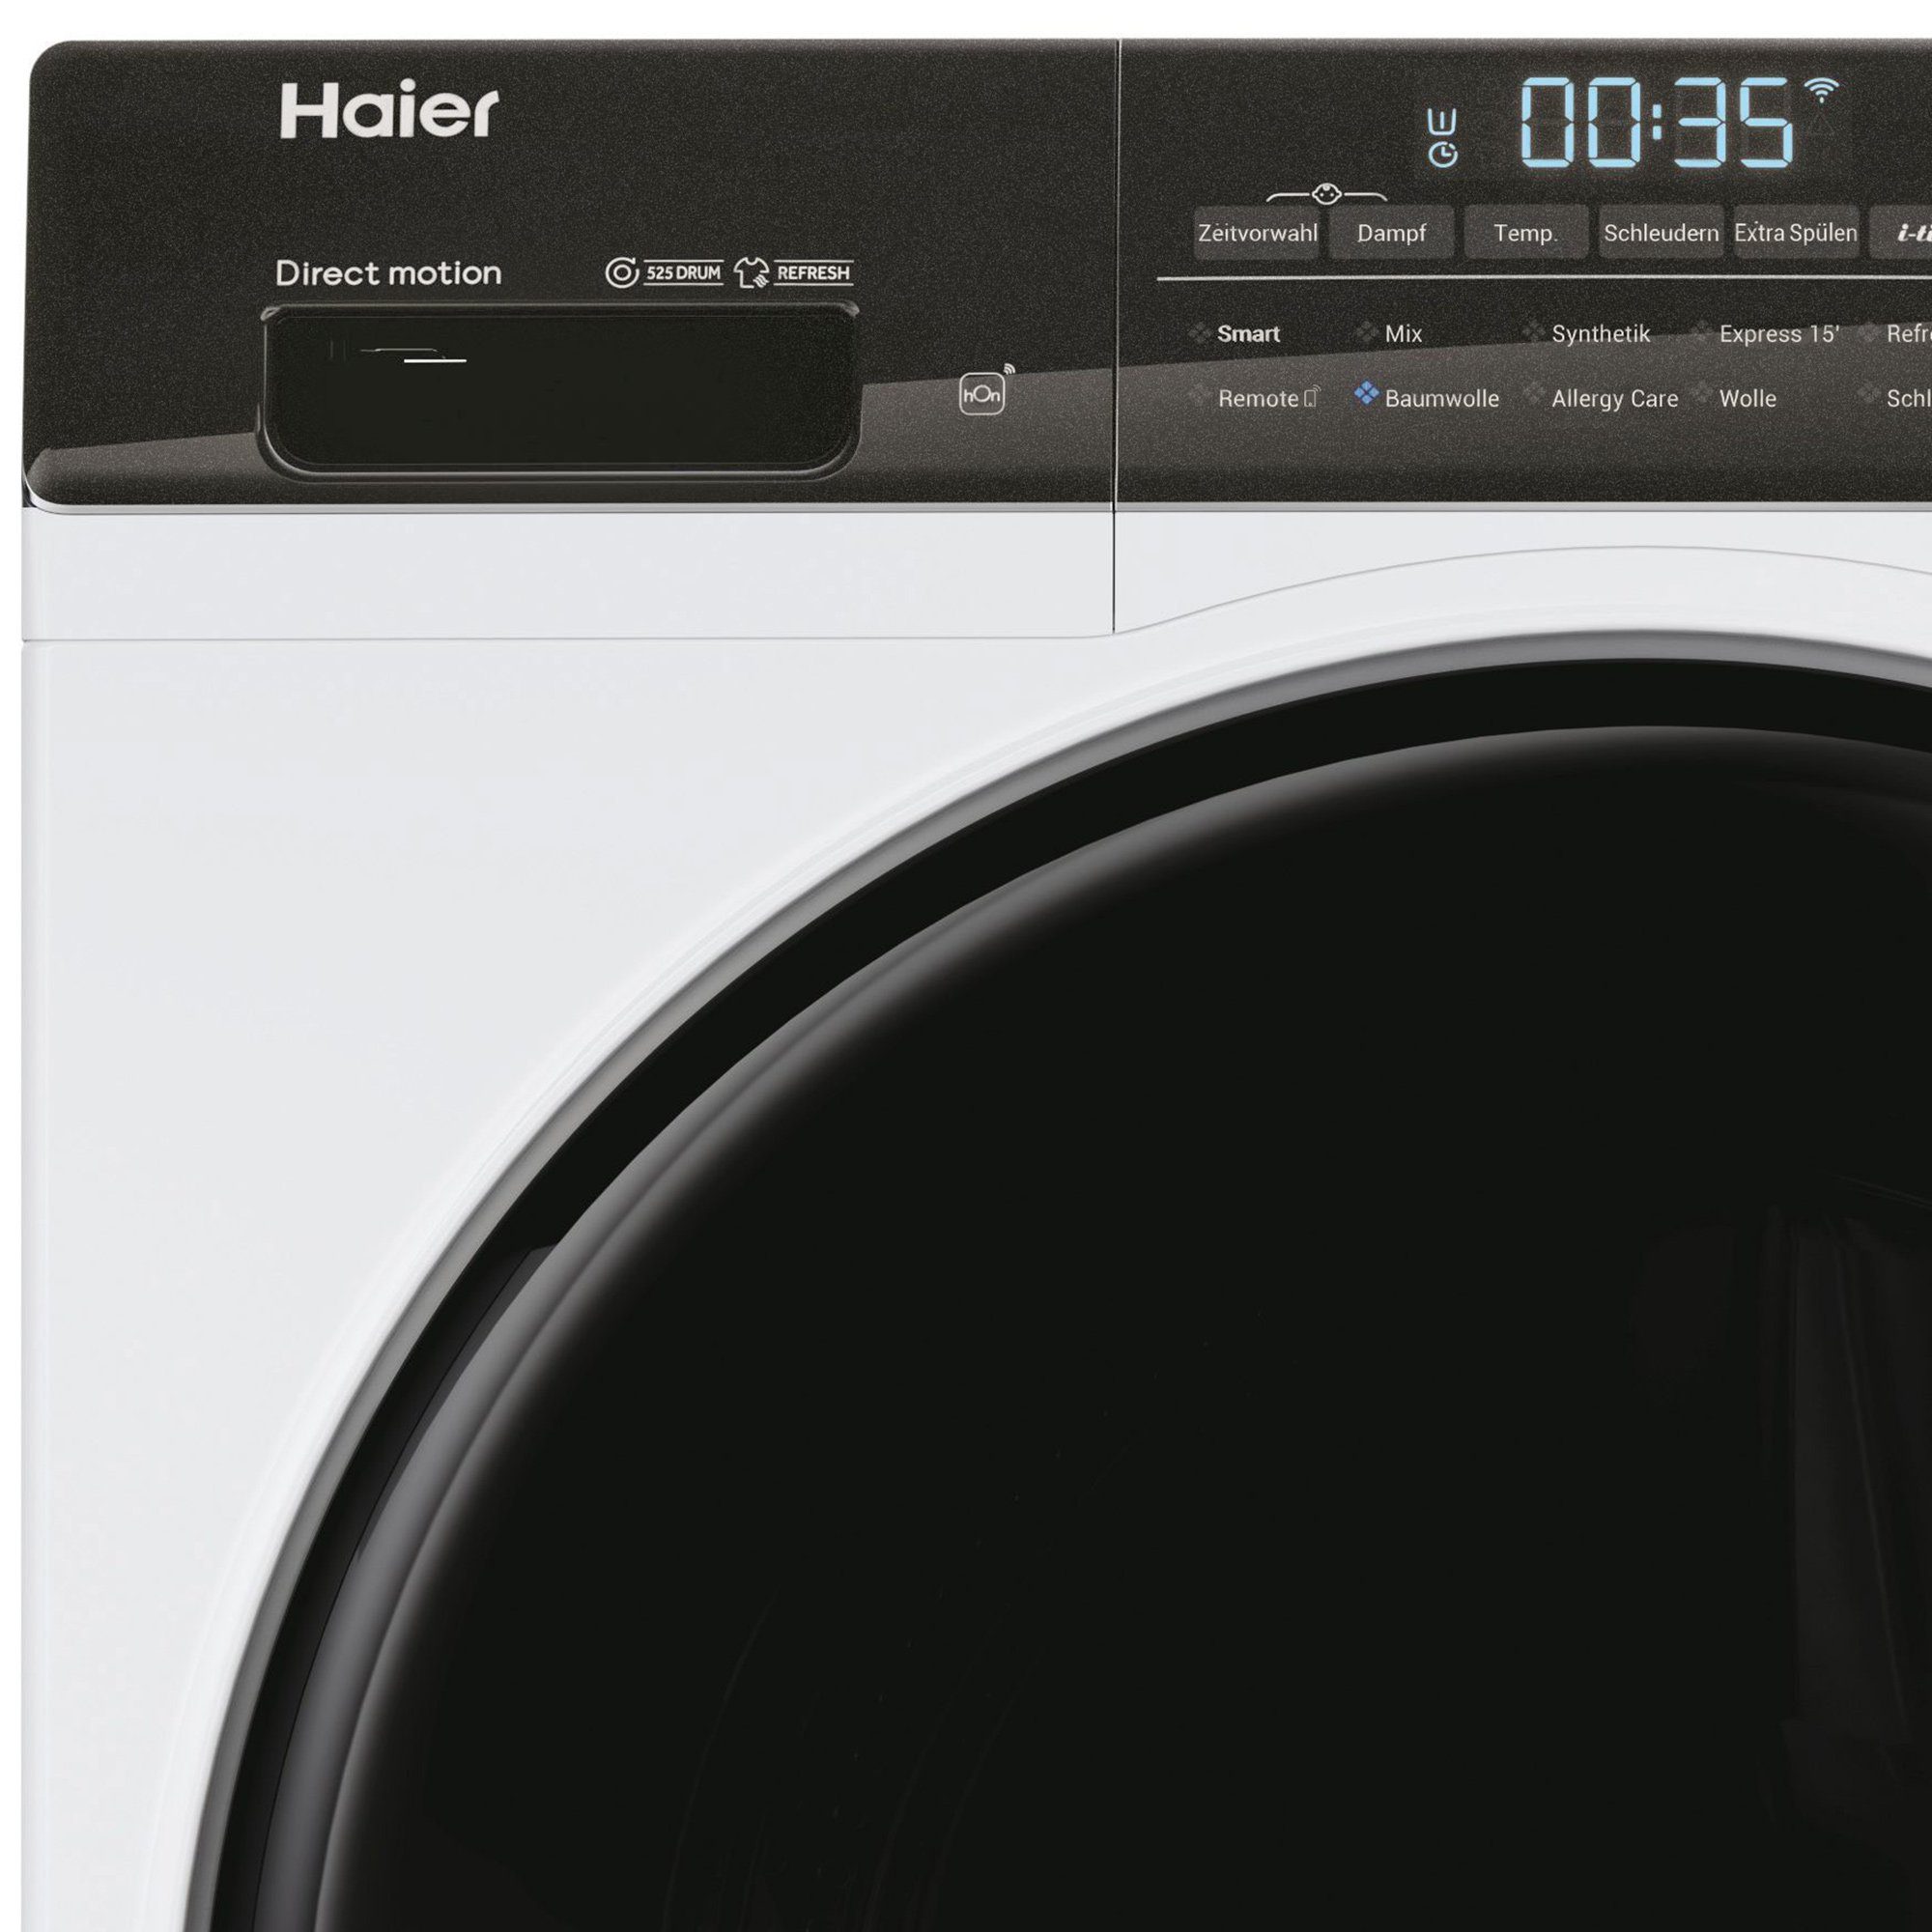 Waschmaschine hOn App, Haier U/min, 1400 Smart HW90-B14TEAM5, i-Time, Refres kg, 9,00